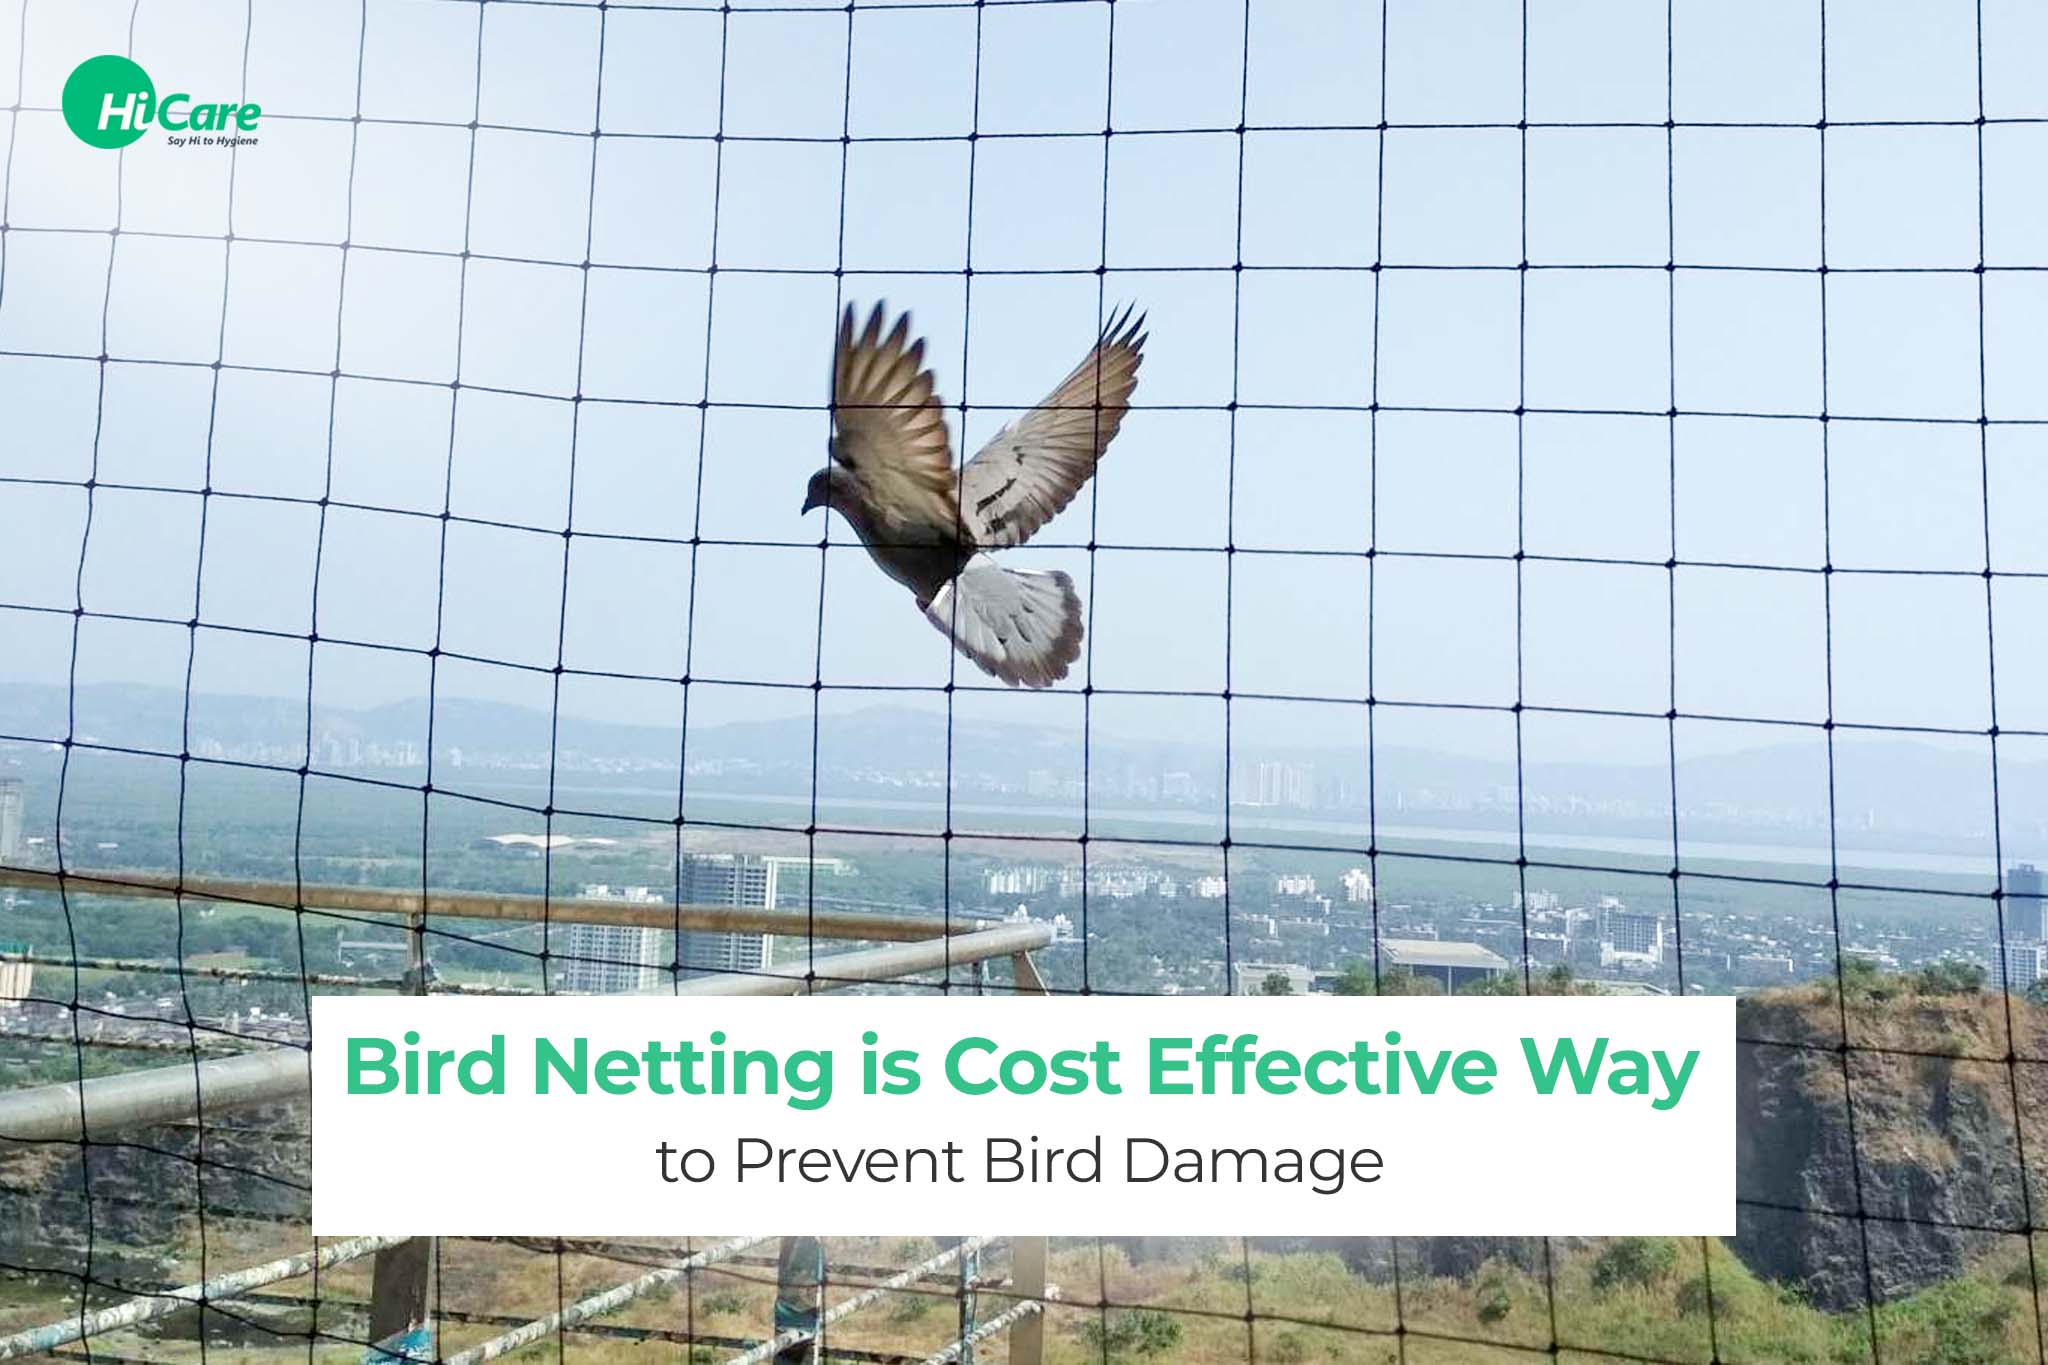 bird netting: cost effective way to prevent bird damage